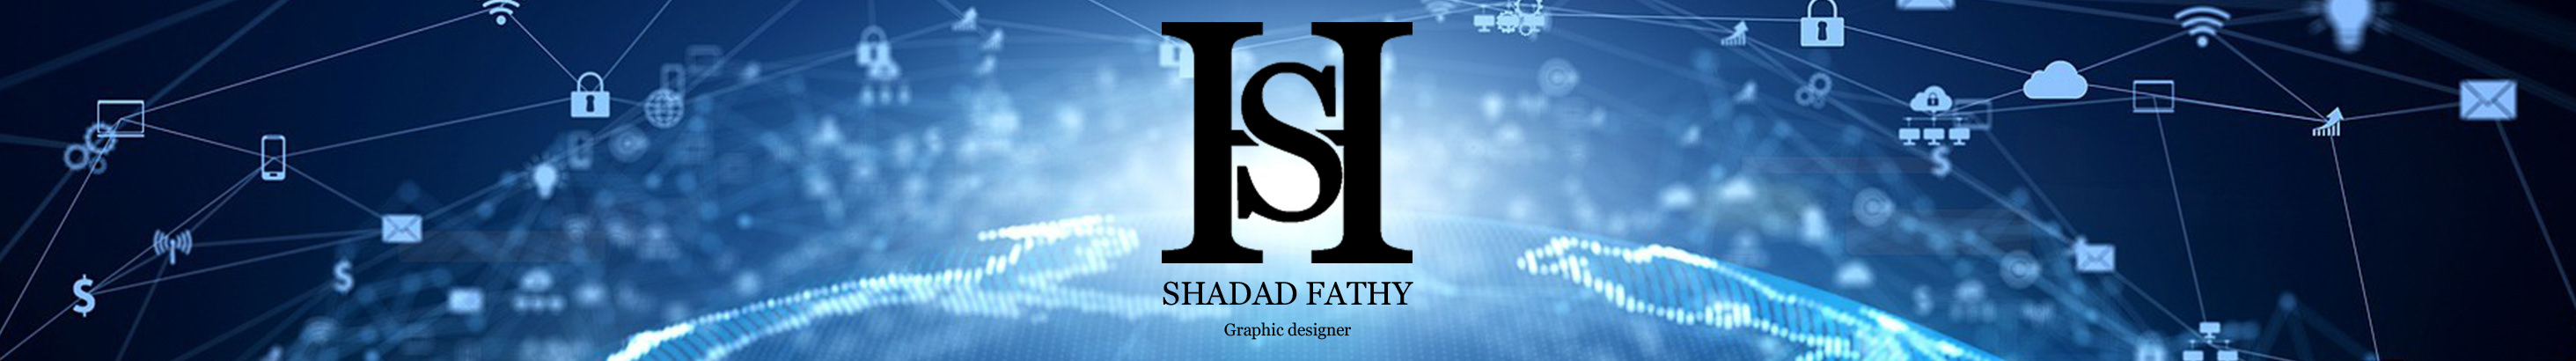 Shadad Fathy's profile banner